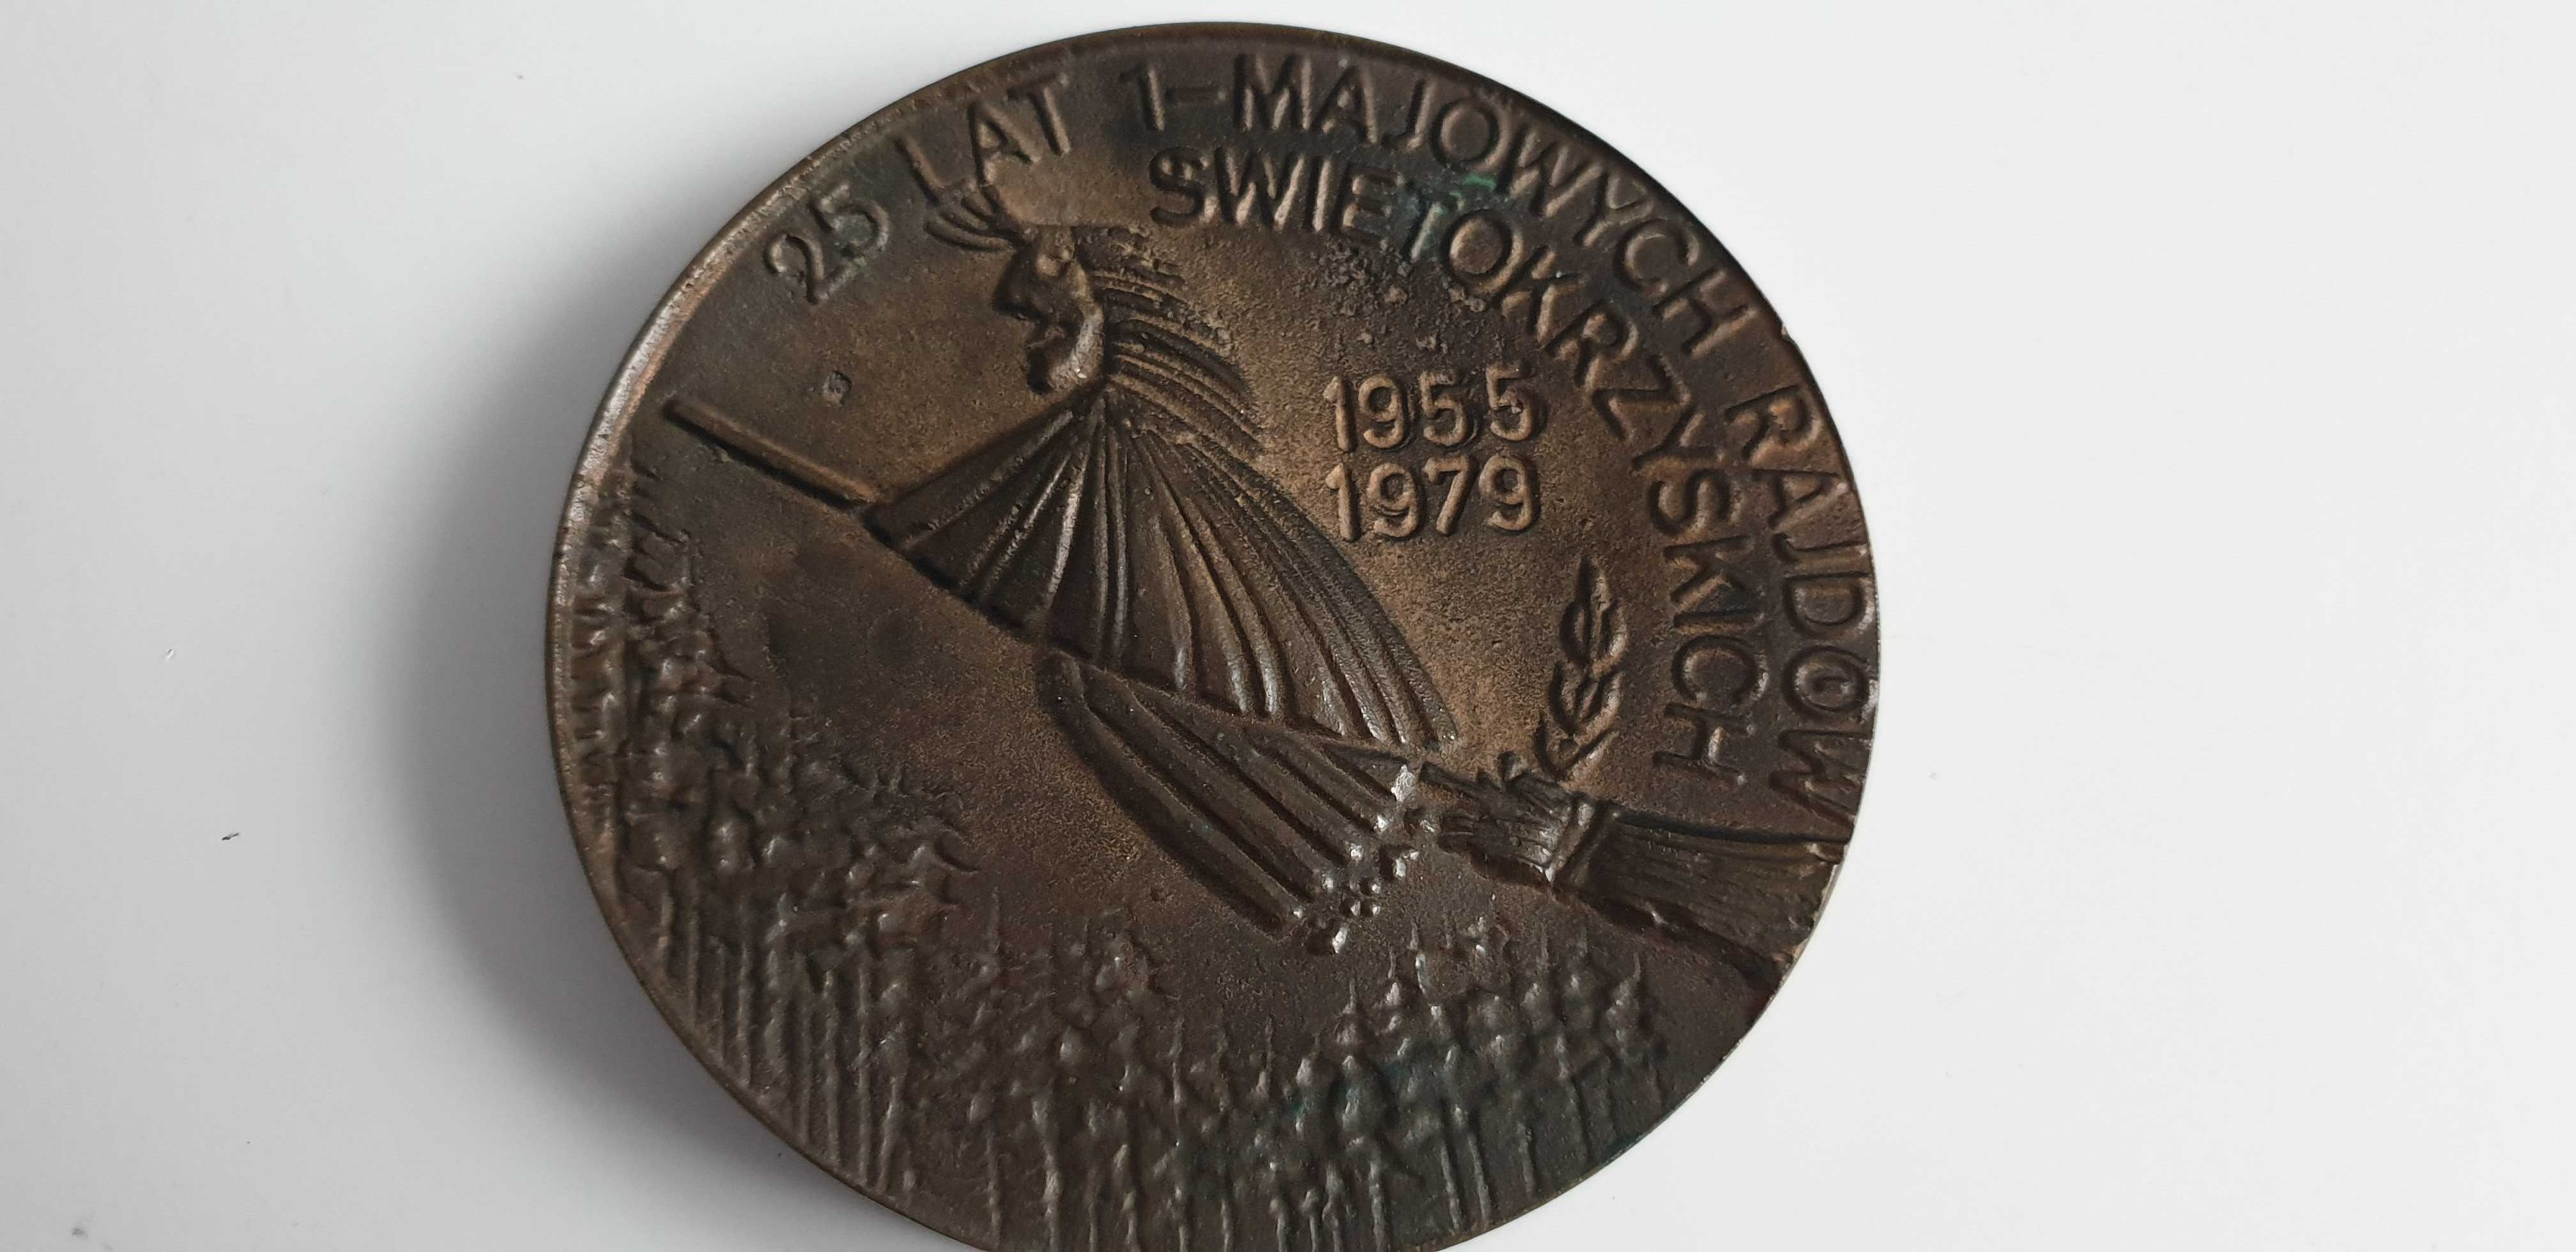 Starocie z Gdyni - Medal PTTK Starachowice 1979r. z brązu